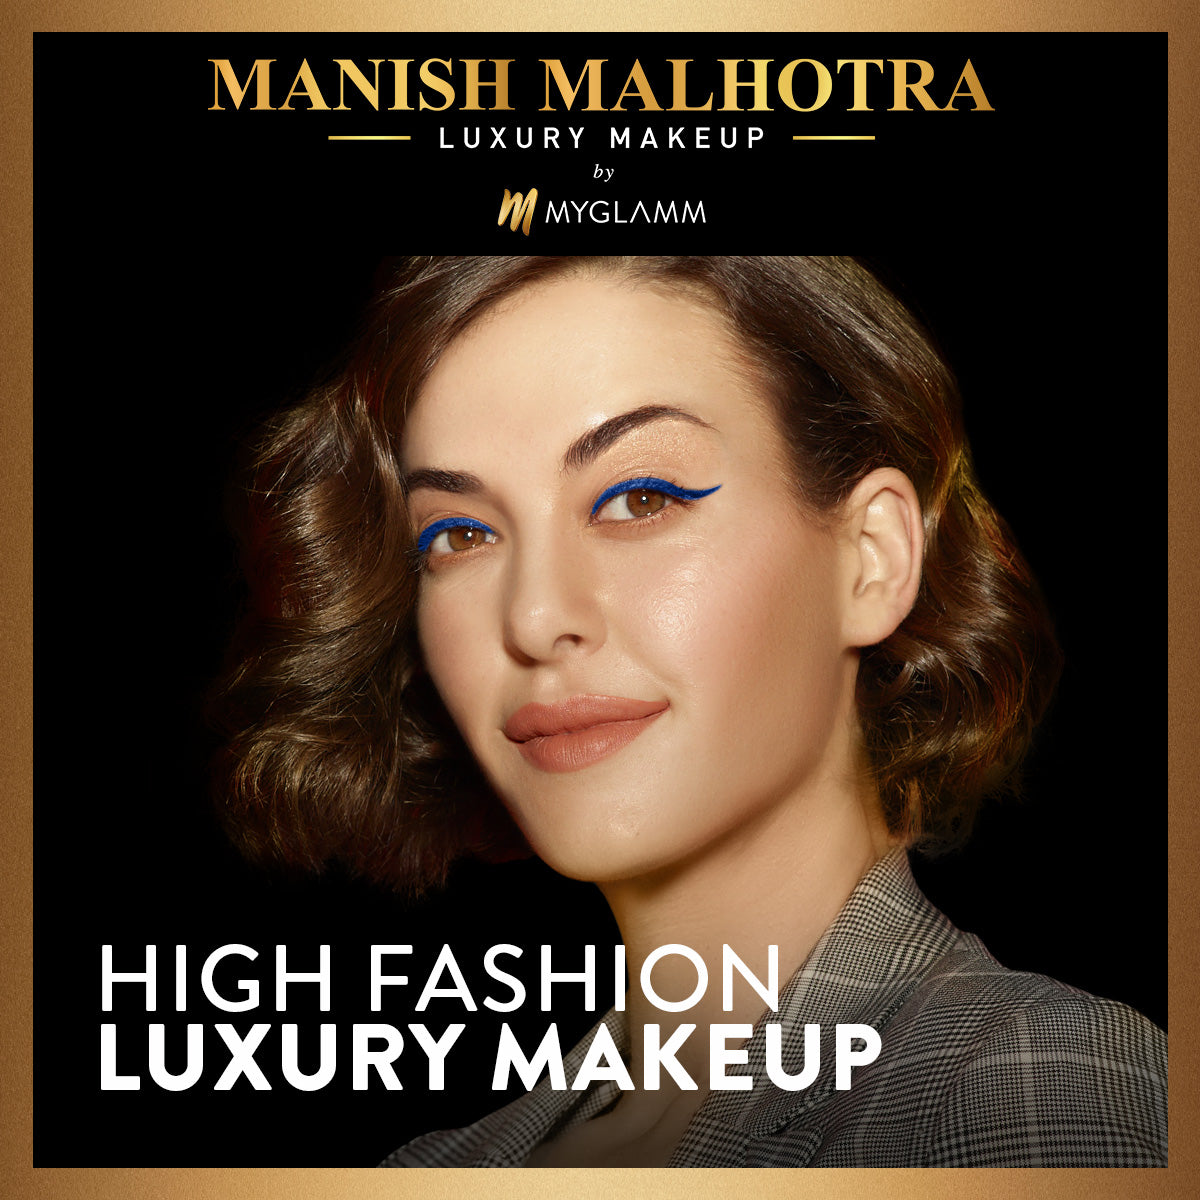 Manish Malhotra Beauty By MyGlamm Precision Liquid Eyeliner-Black Diamond-1gm